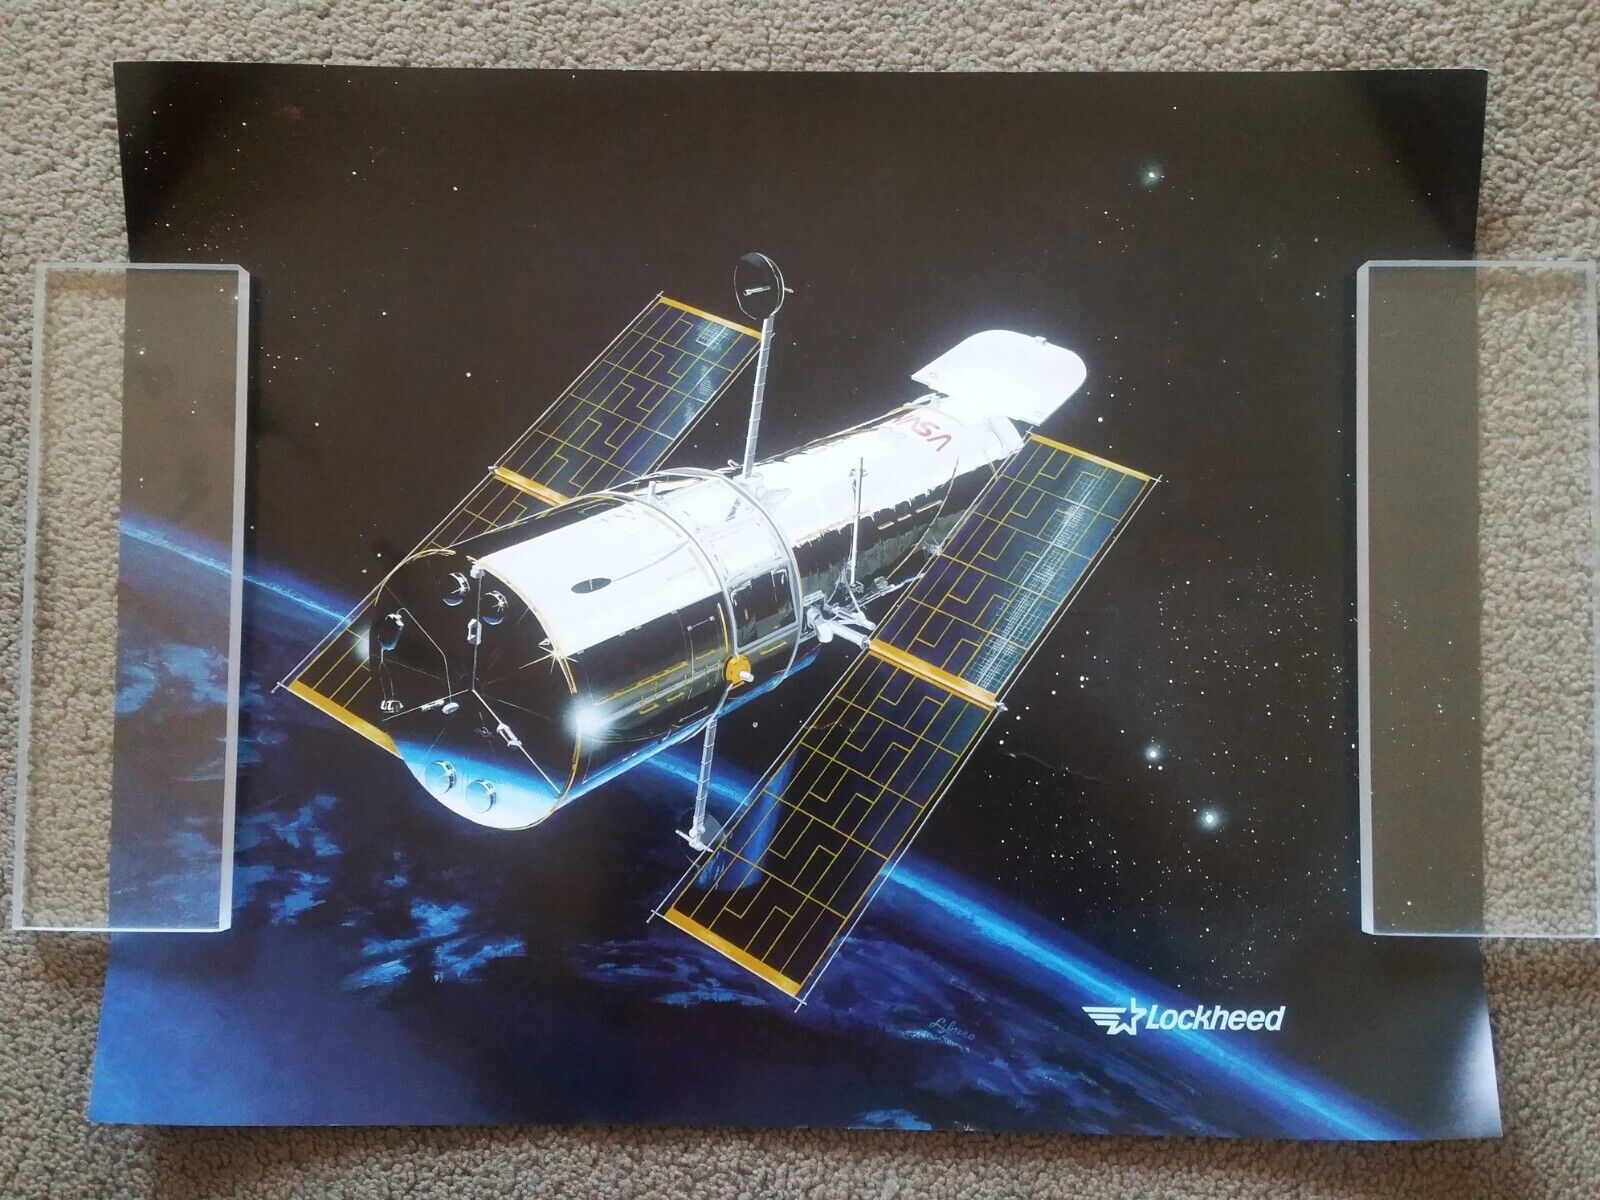 Rare Lockheed NASA Hubble Space Telescope Poster - Very Good Condition